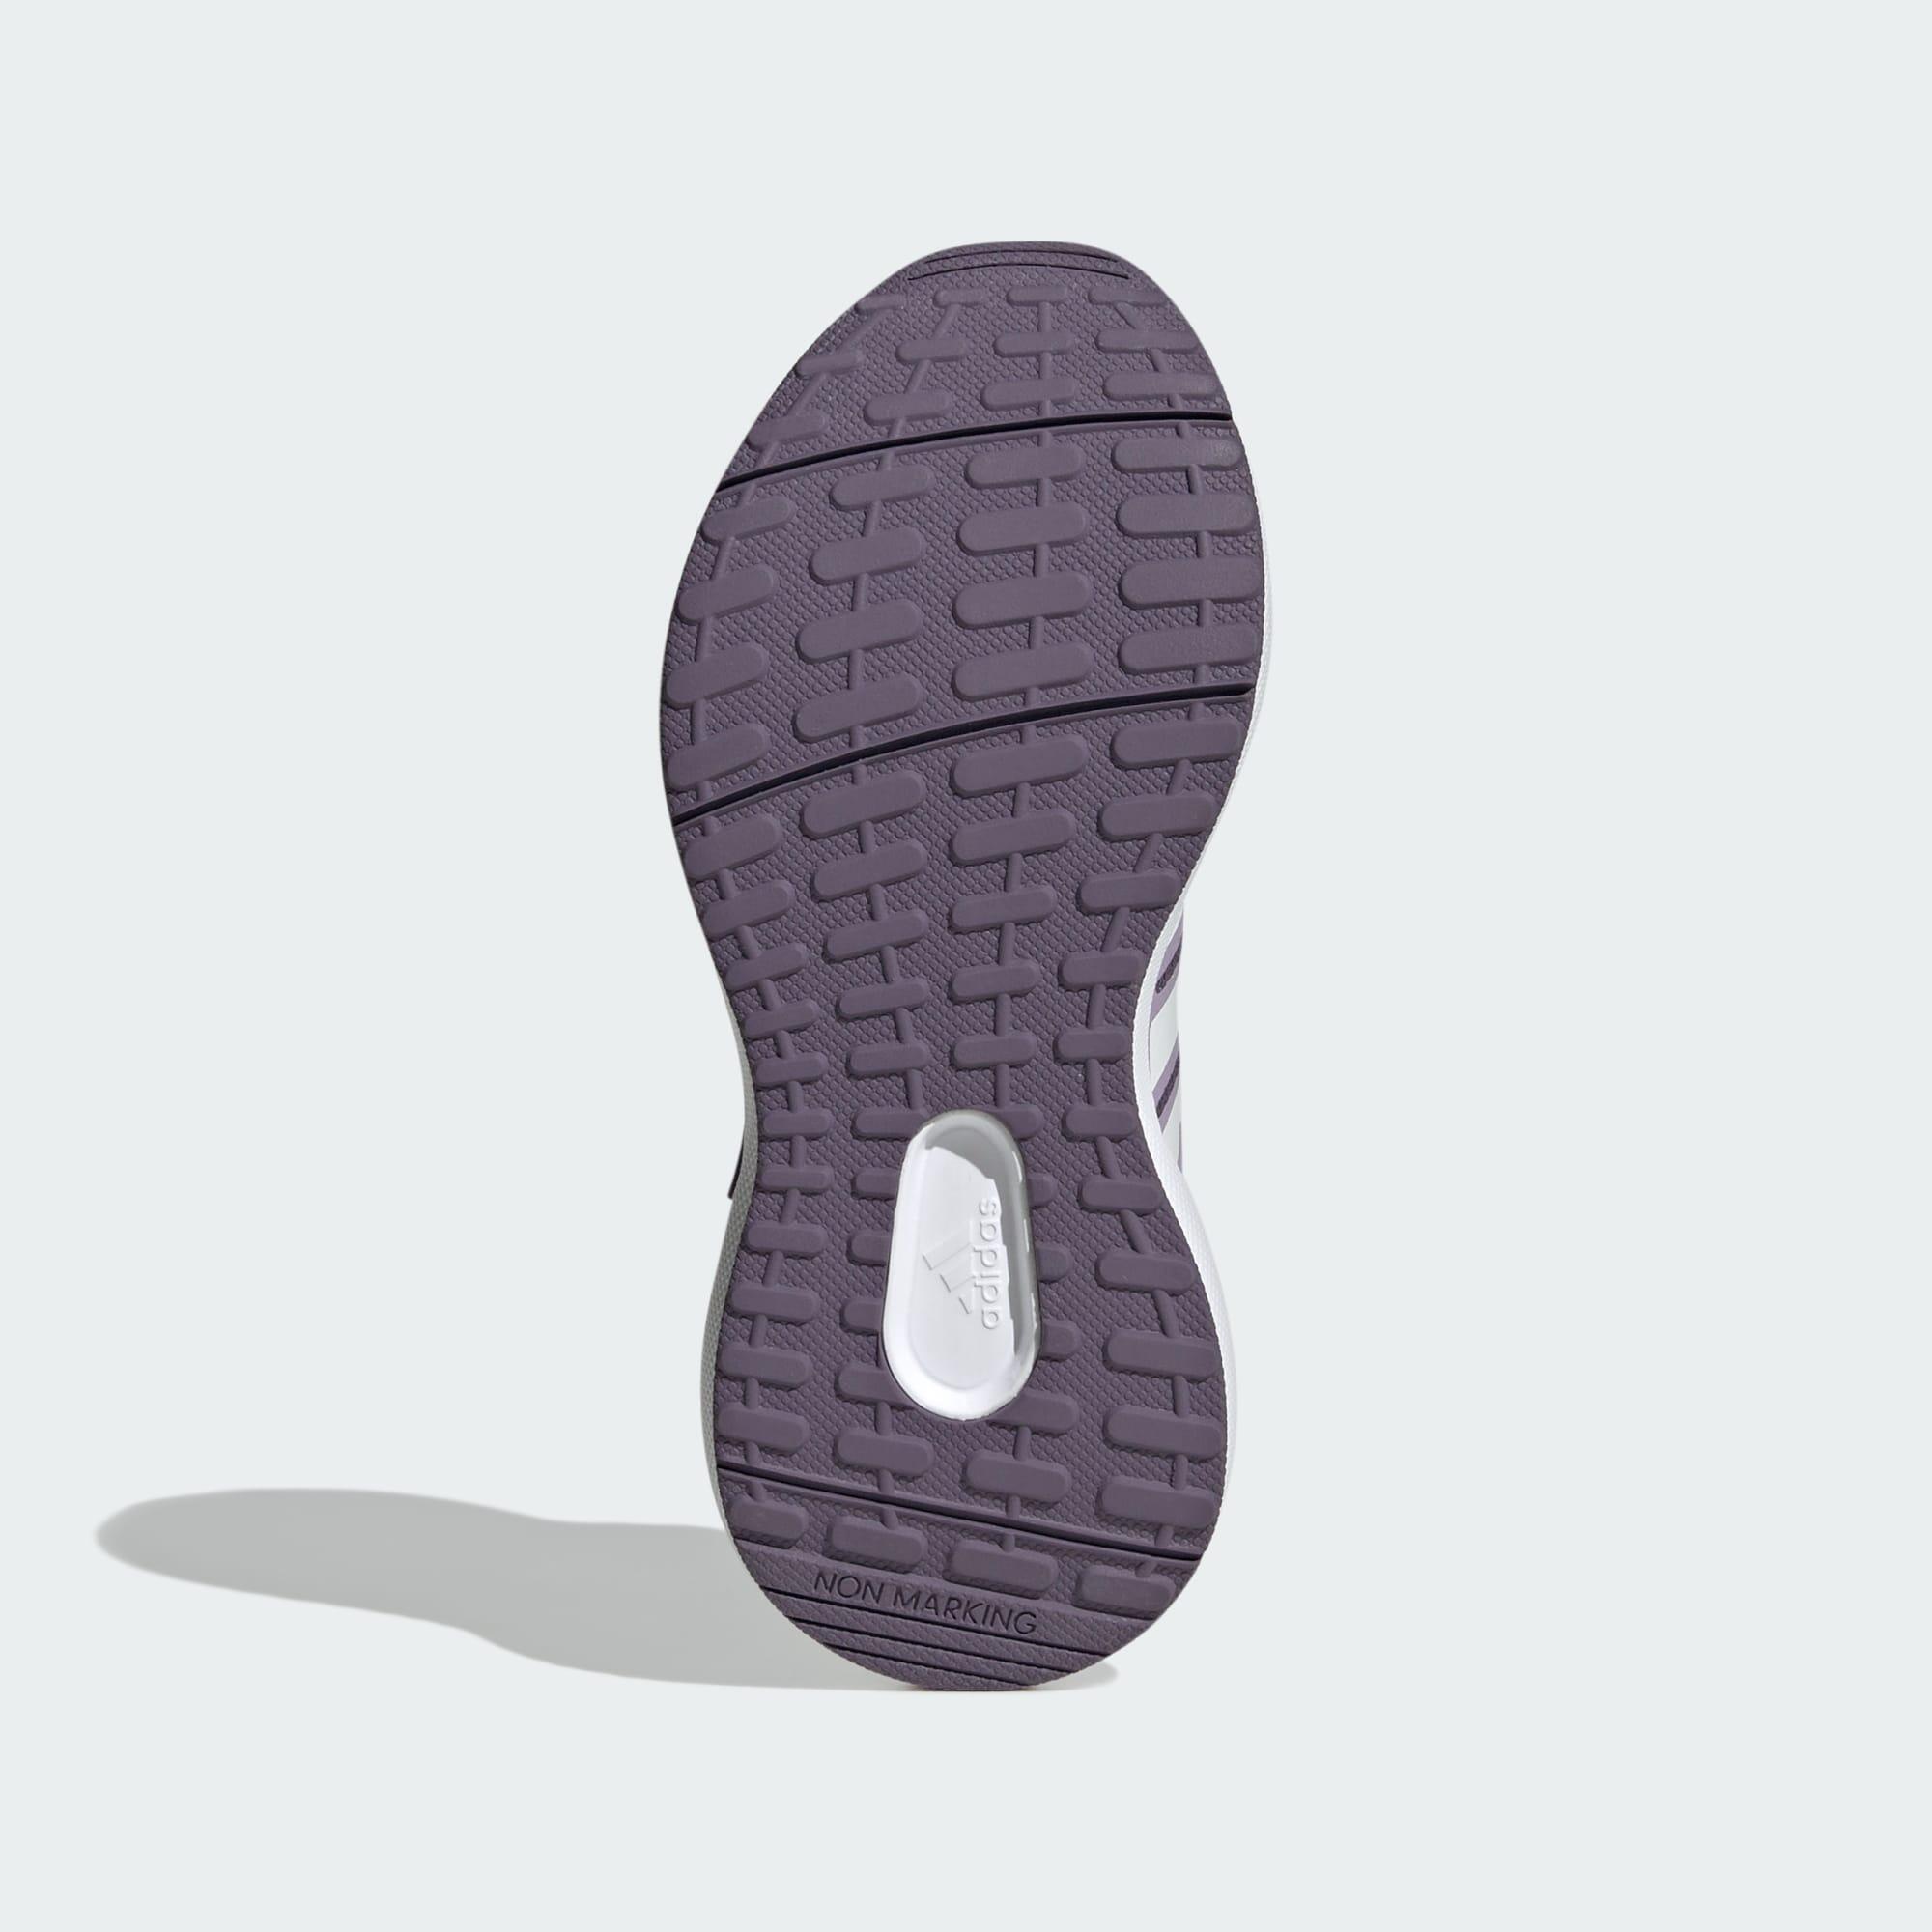 FortaRun 2.0 Cloudfoam Elastic Lace Top Strap Shoes 4/7